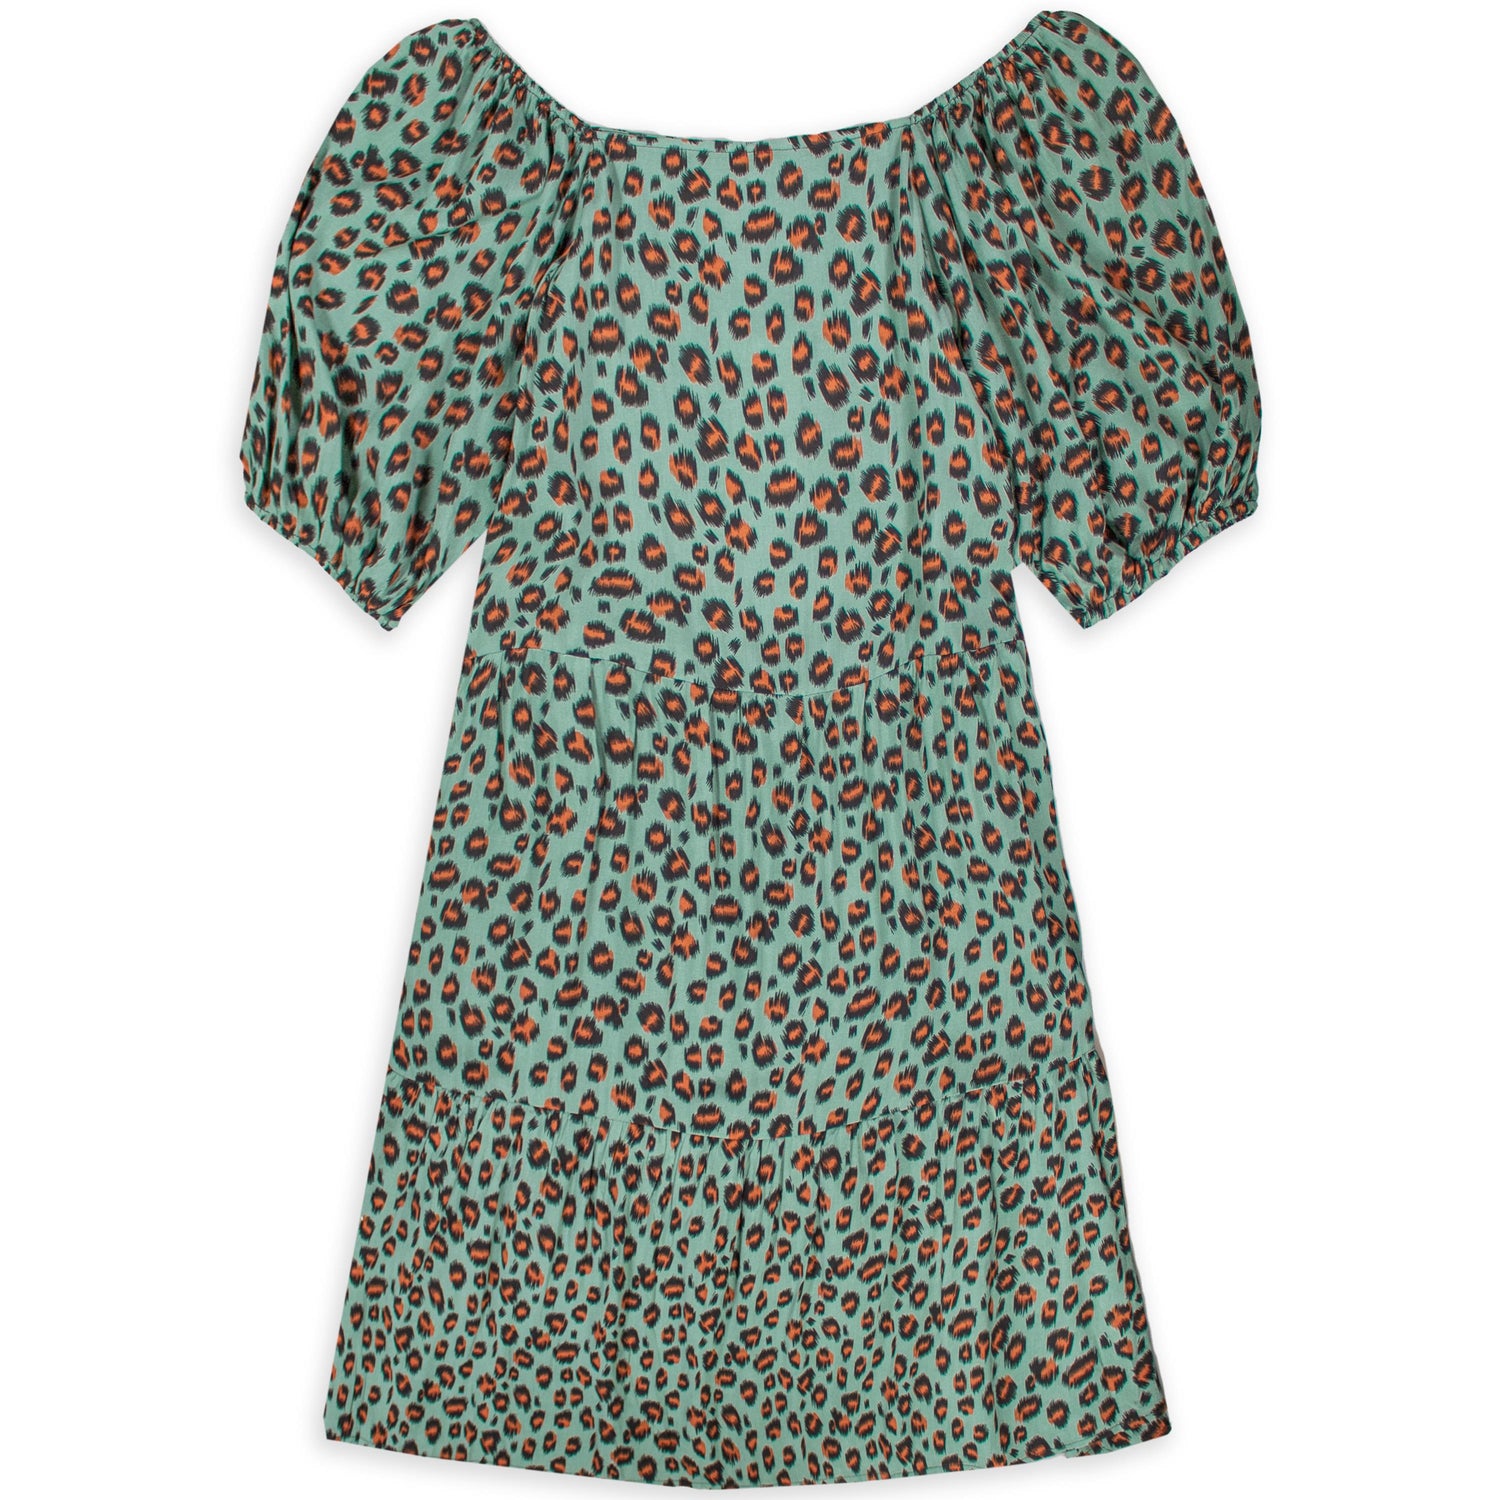 Turquoise Animal Print Capped Sleeve Tiffany Dress